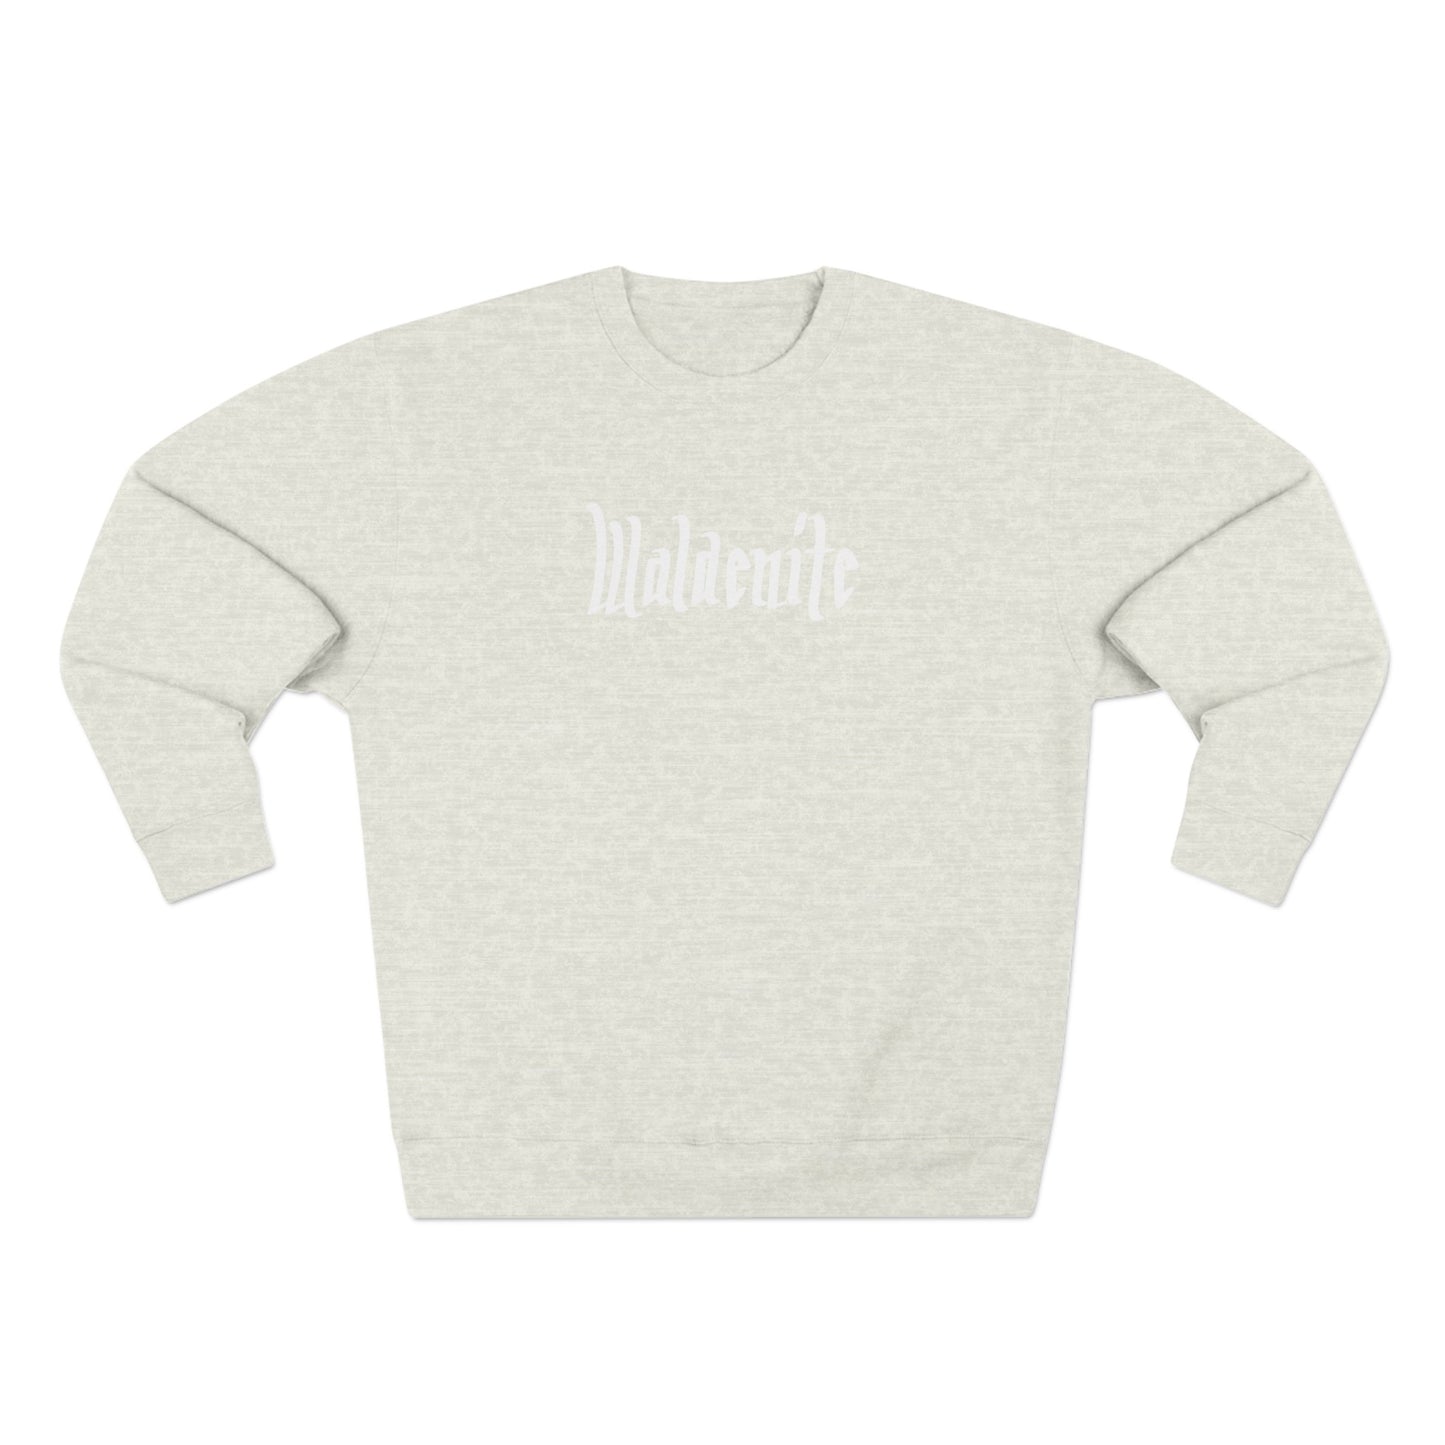 Waldenite Crewneck Sweatshirt